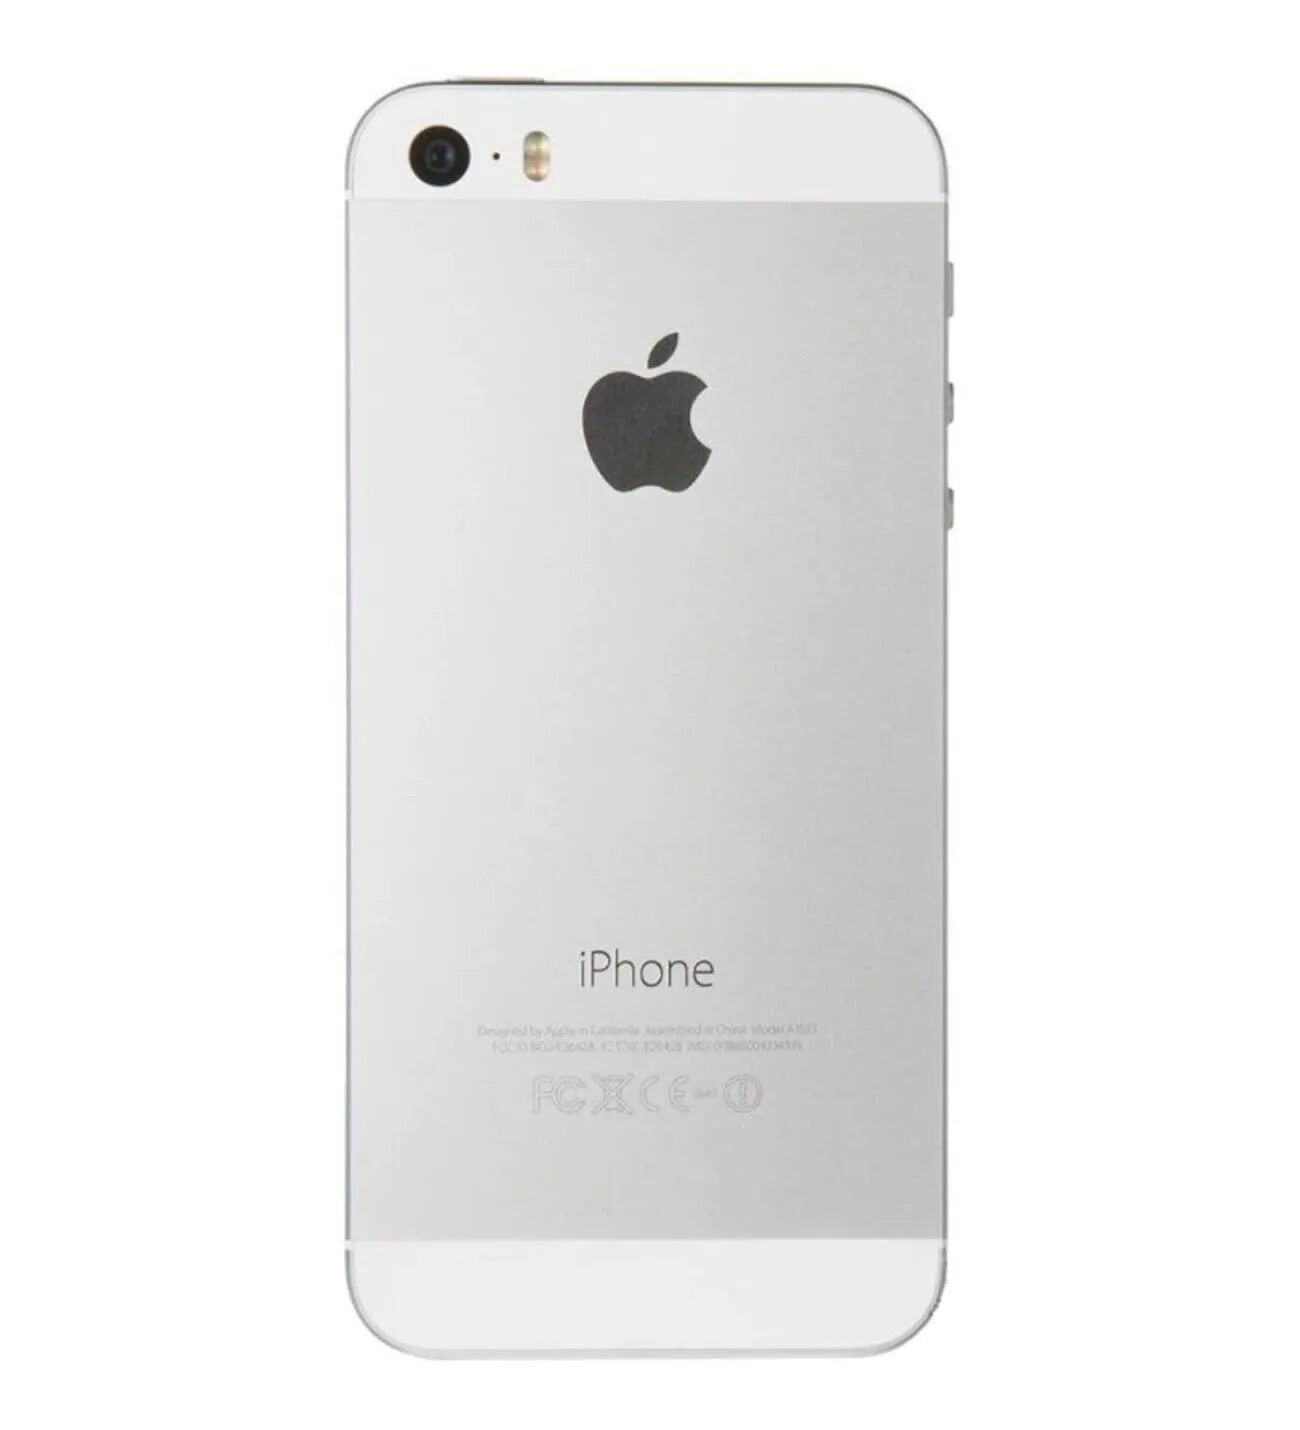 Корпус apple iphone. Apple iphone 5s 16gb Silver - серебристый. Корпус iphone 5 Silver. Apple iphone se 32gb Silver. Айфон 5 серый.